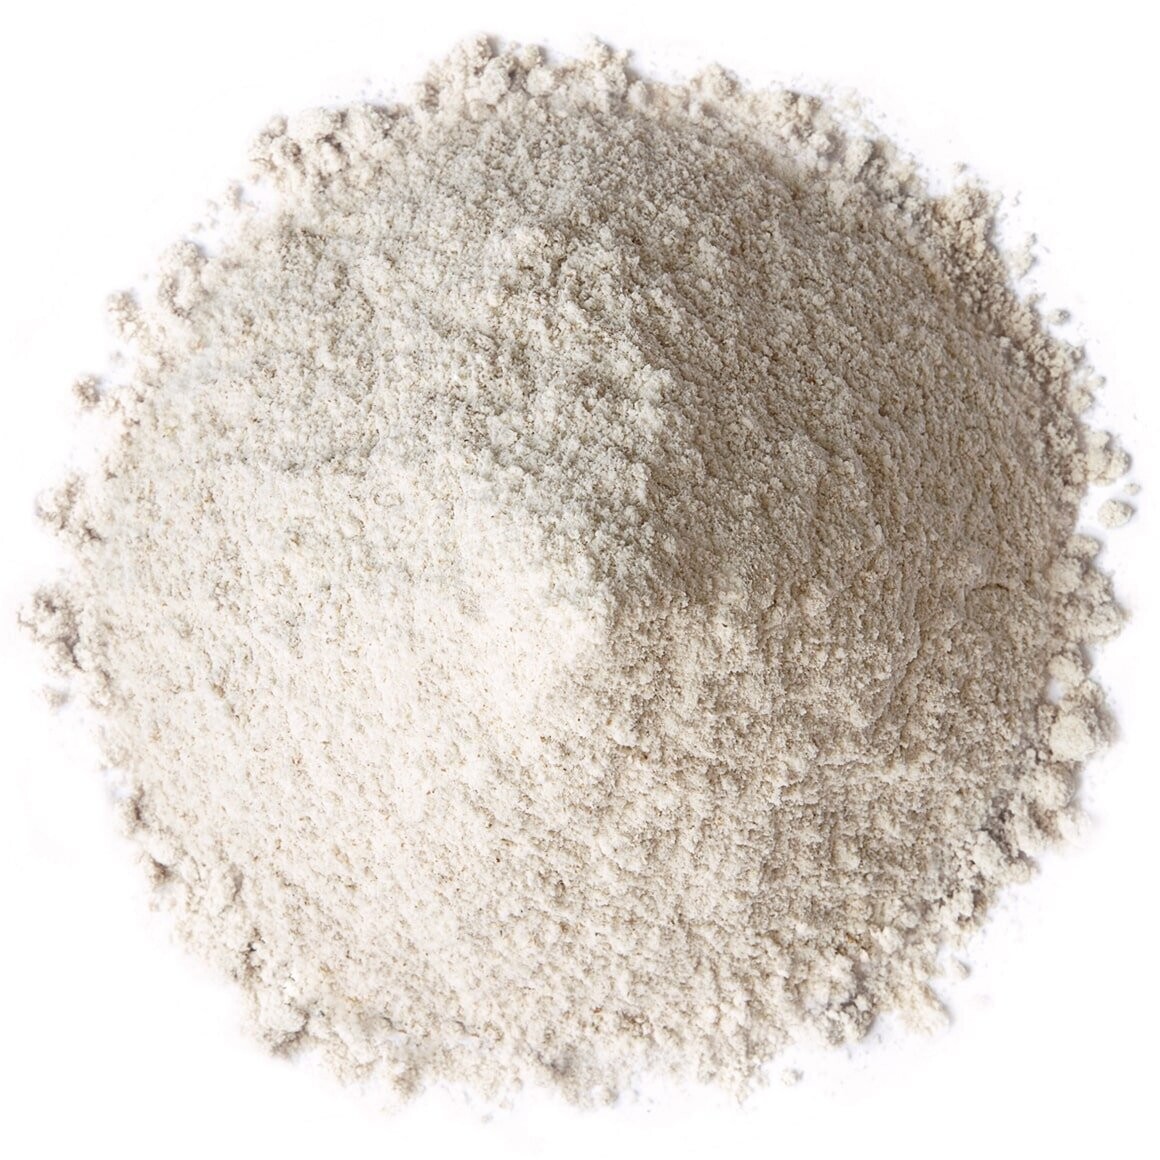 202 Brown Rice Flour Organic - 1lb. (FF1)